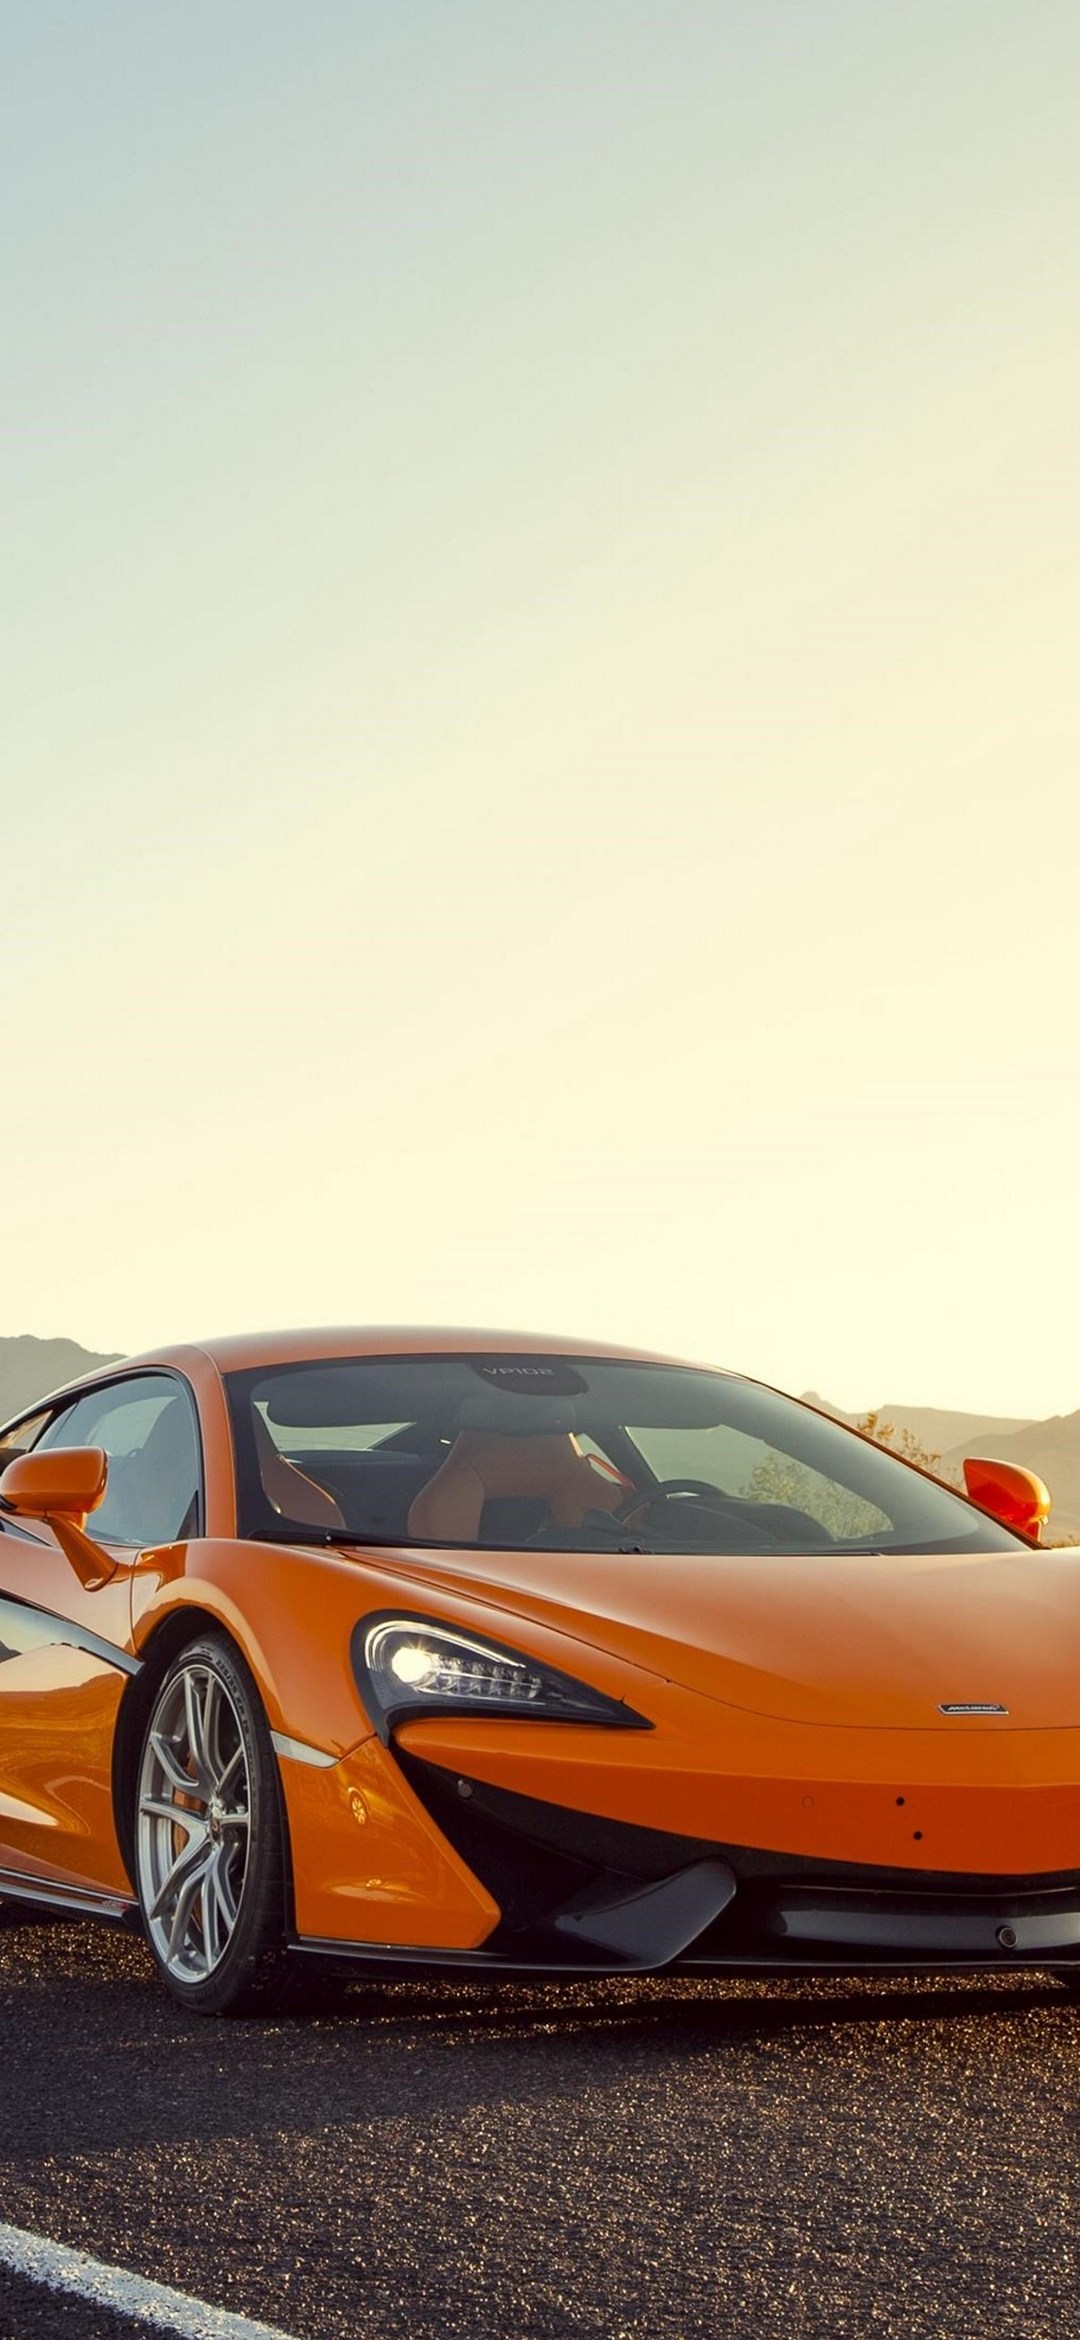 Cool Orange Sports Car Oppo Reno A Android スマホ壁紙 待ち受け スマラン